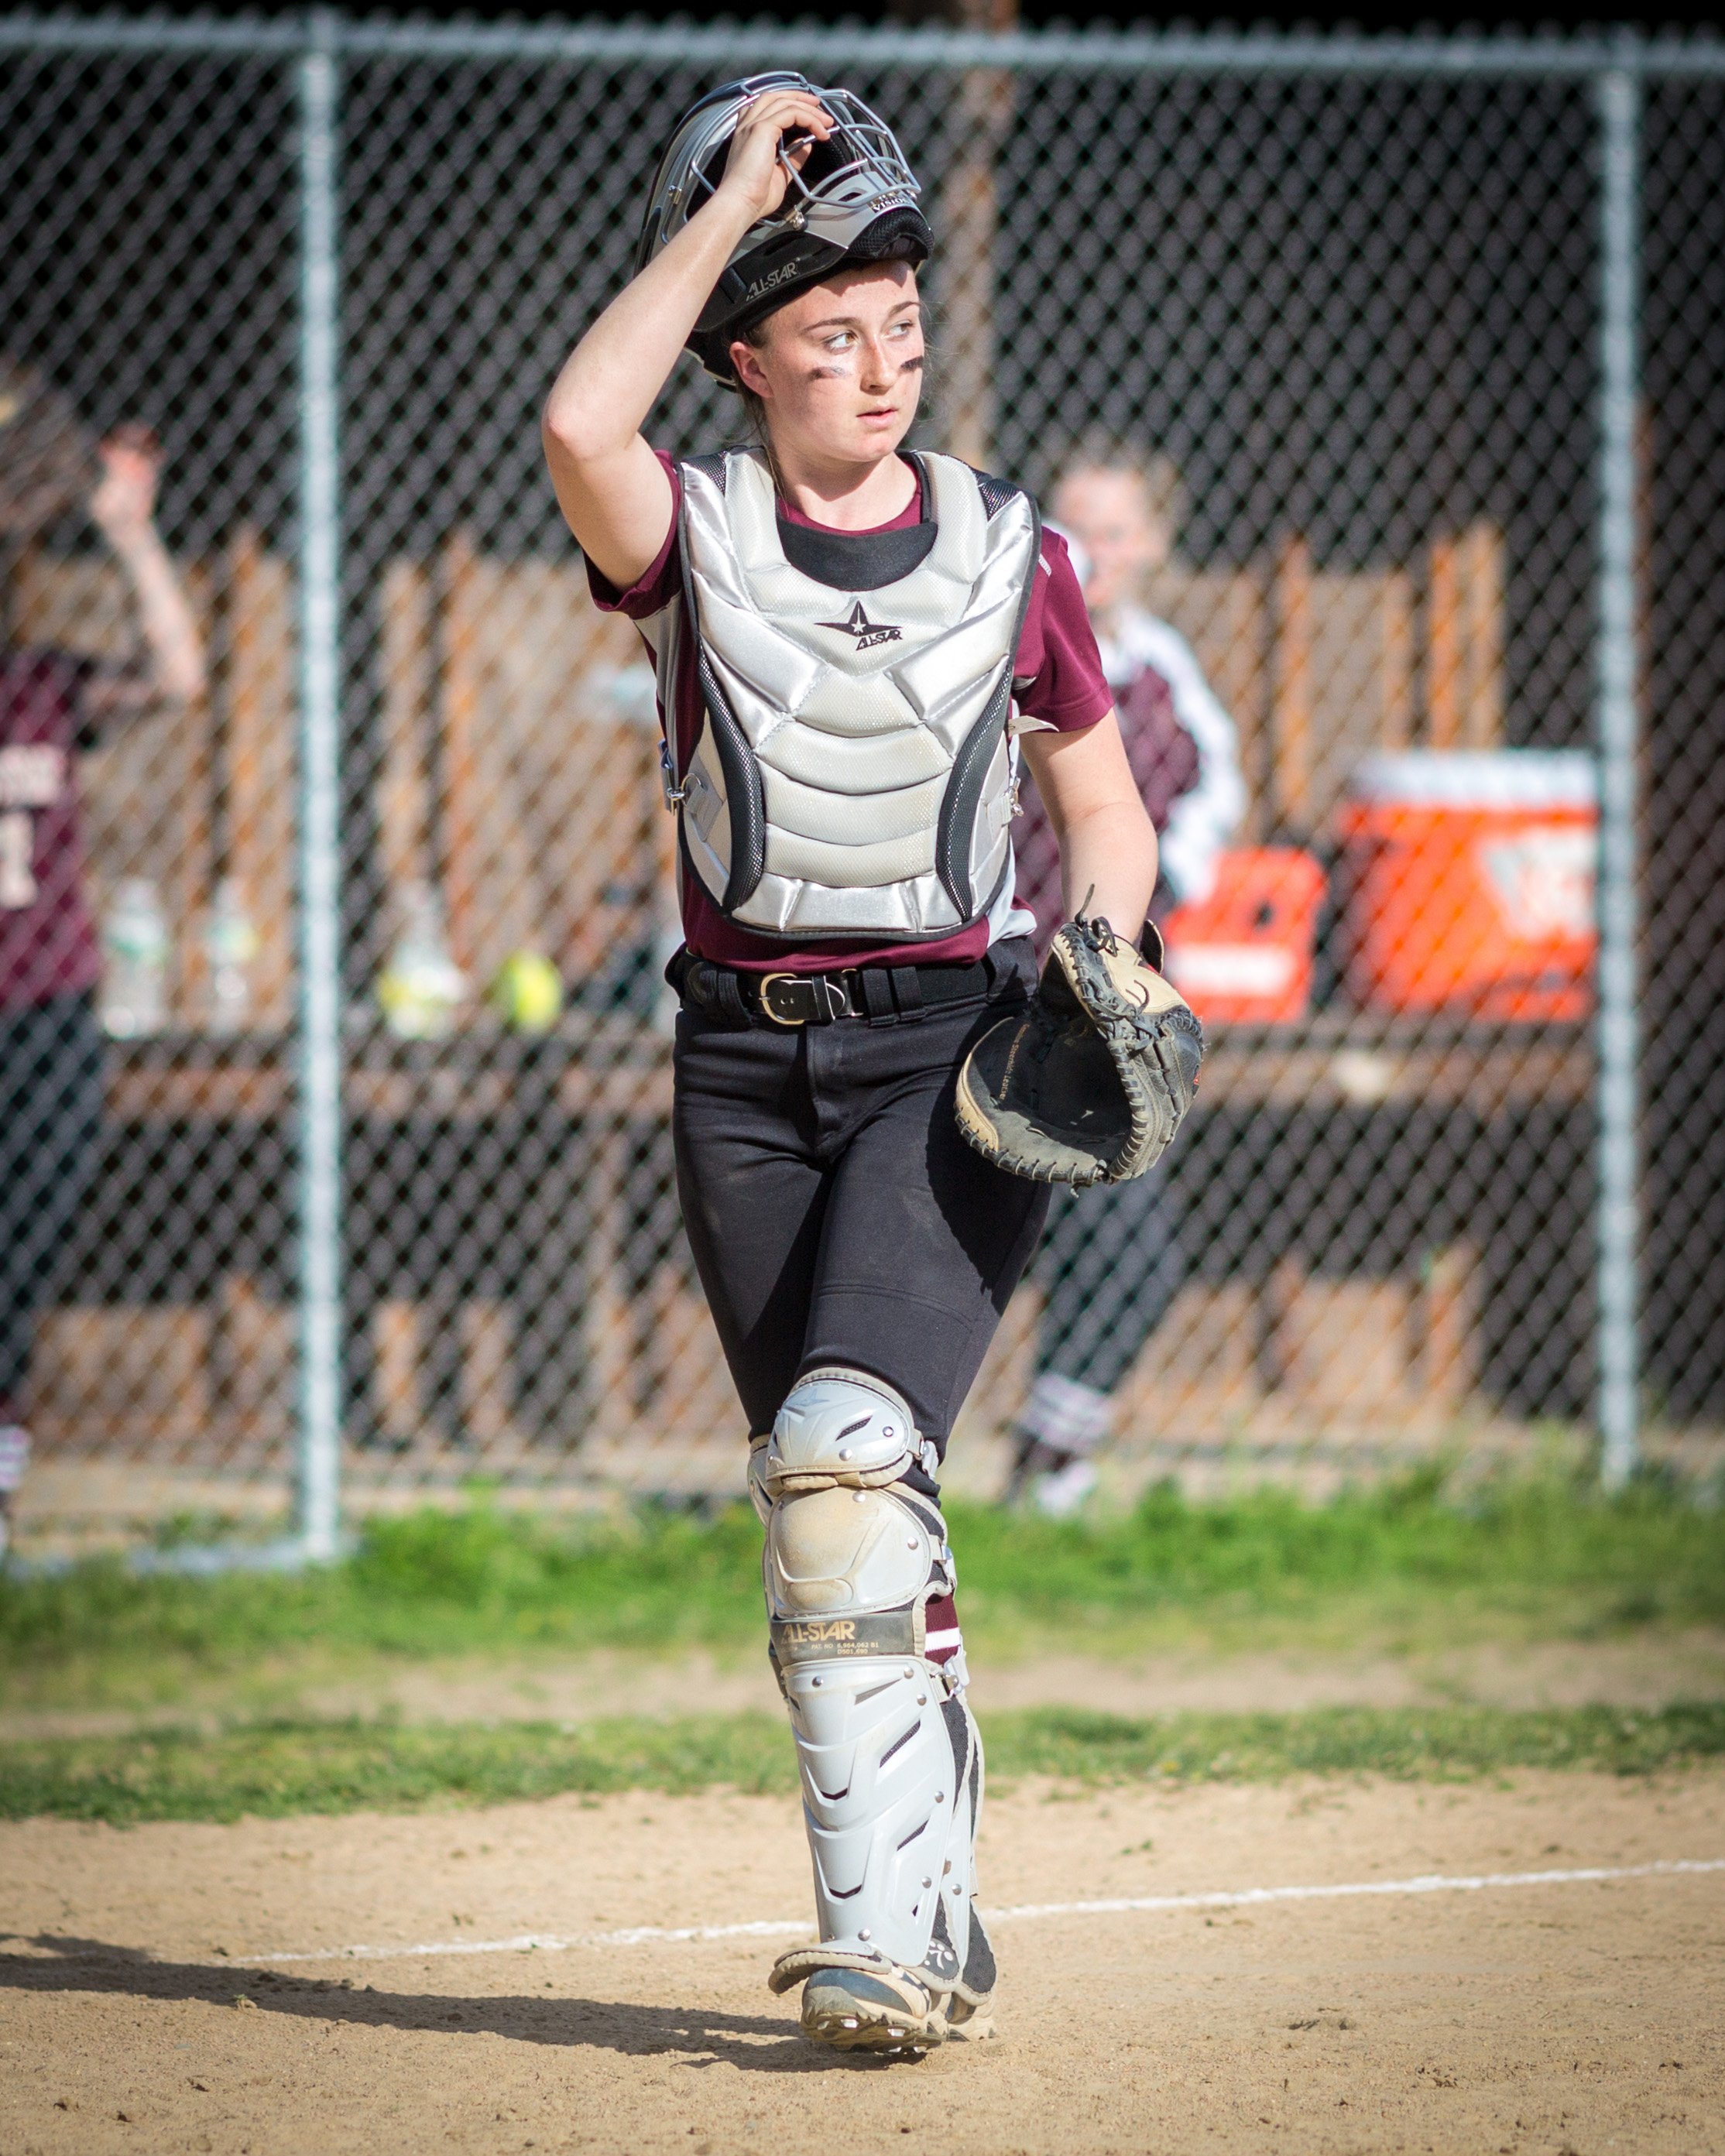 High school catcher, May 2018.